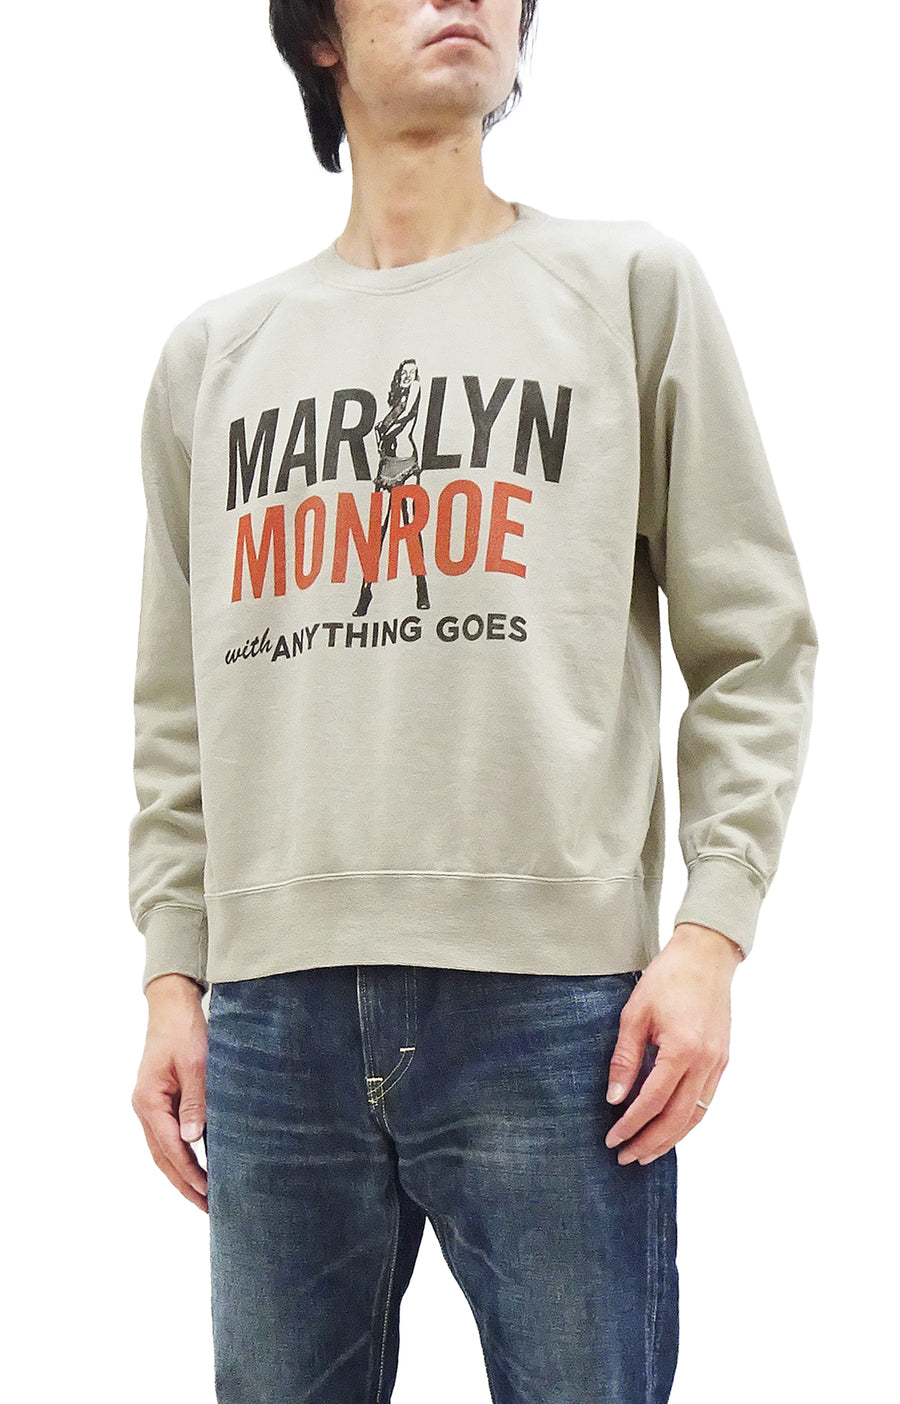 TOYS McCOY French Terry Sweatshirt Men's Marilyn Monroe Anything Goes Graphic Long Sleeve Sweatshirt TMC2358 041 Faded-Sand-Beige